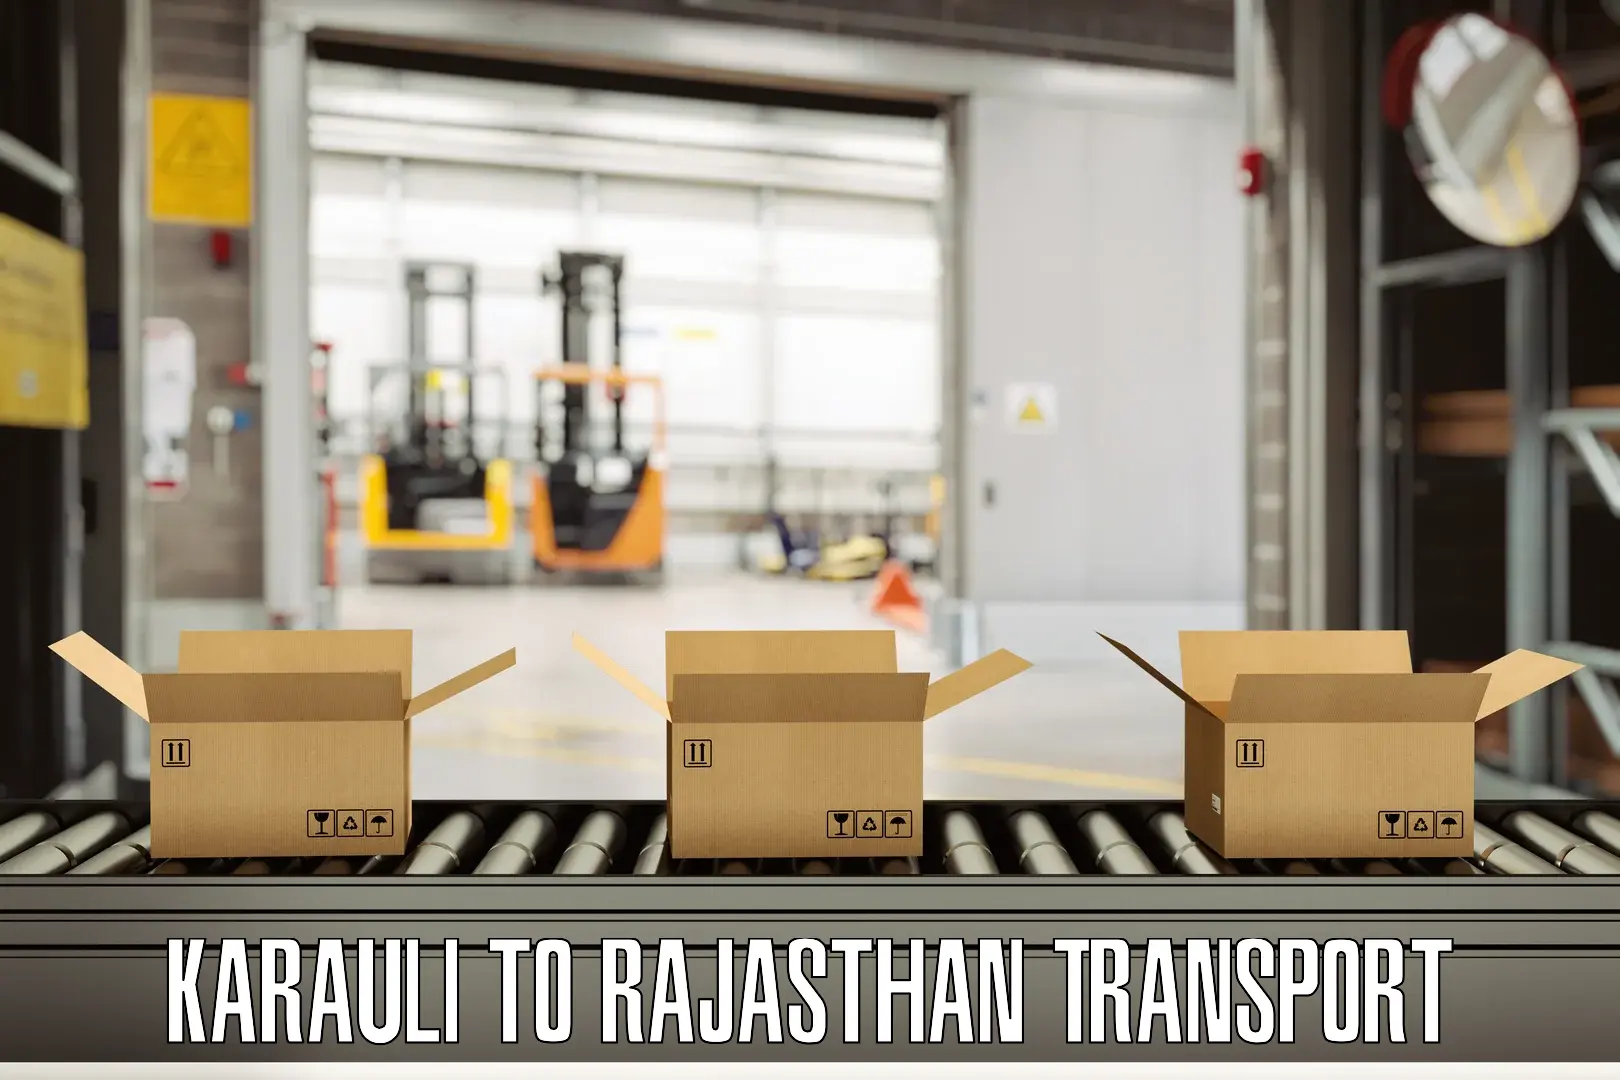 Truck transport companies in India Karauli to Jaipur